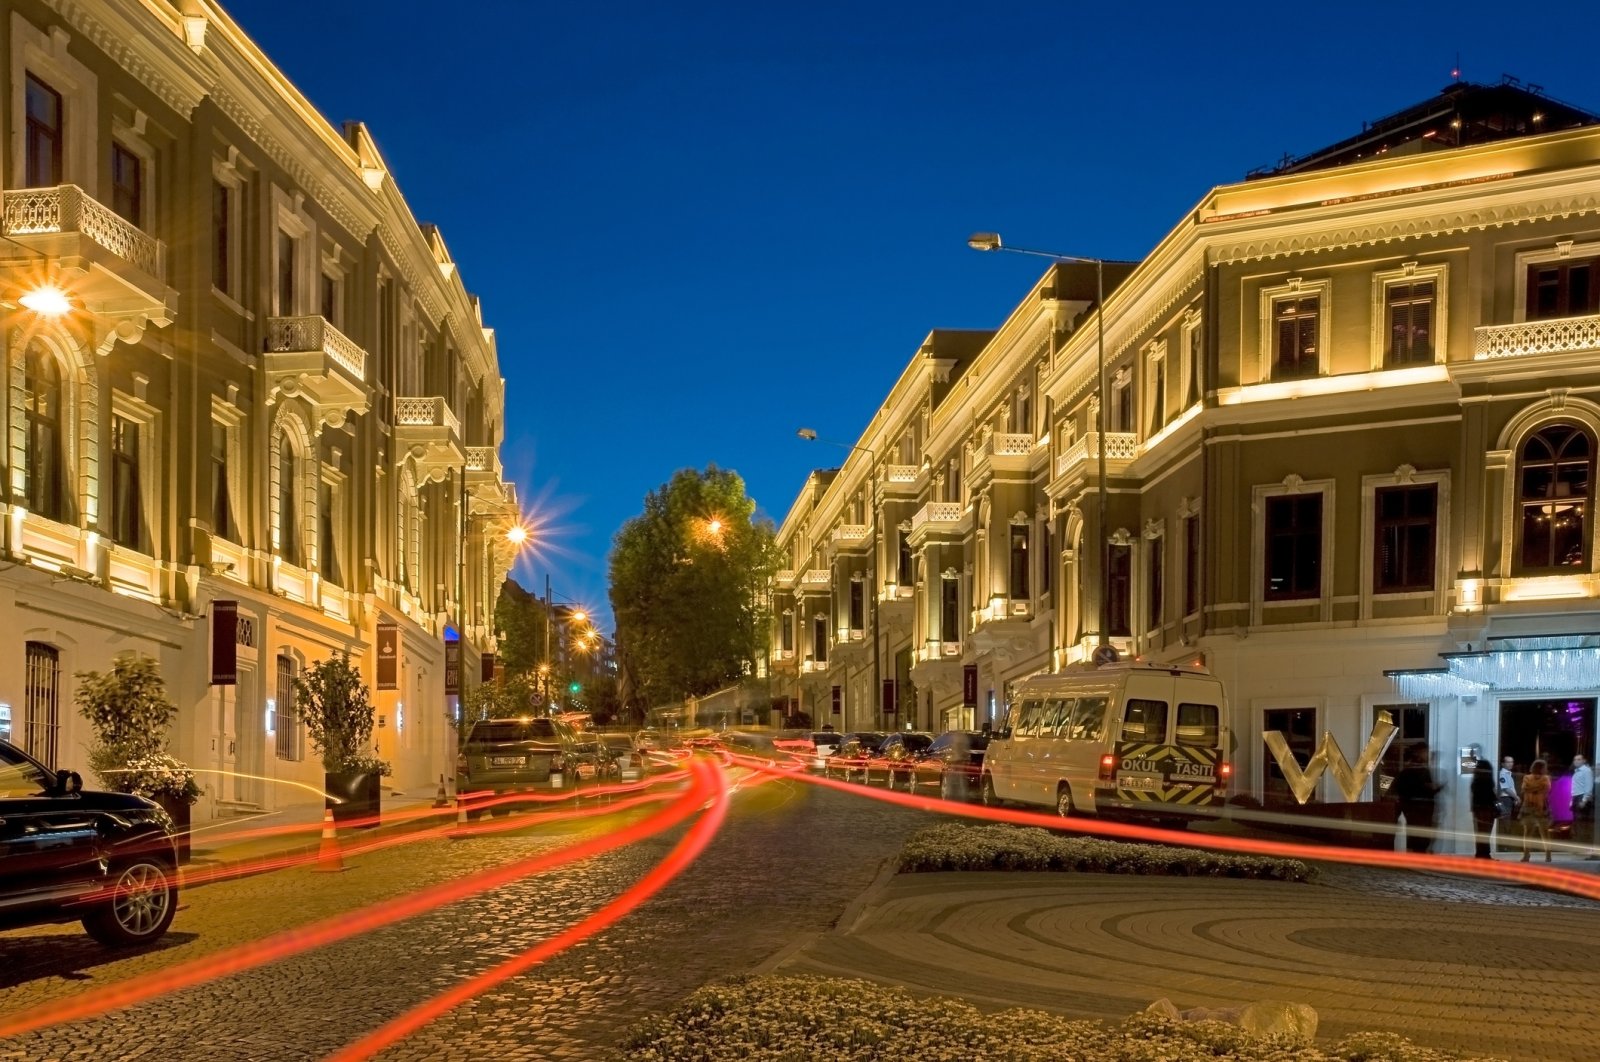 Akaretler street, located in the renovated Akaretler Row Houses, Süleyman Seba Street, Istanbul, Türkiye. (Getty Images Photo)
